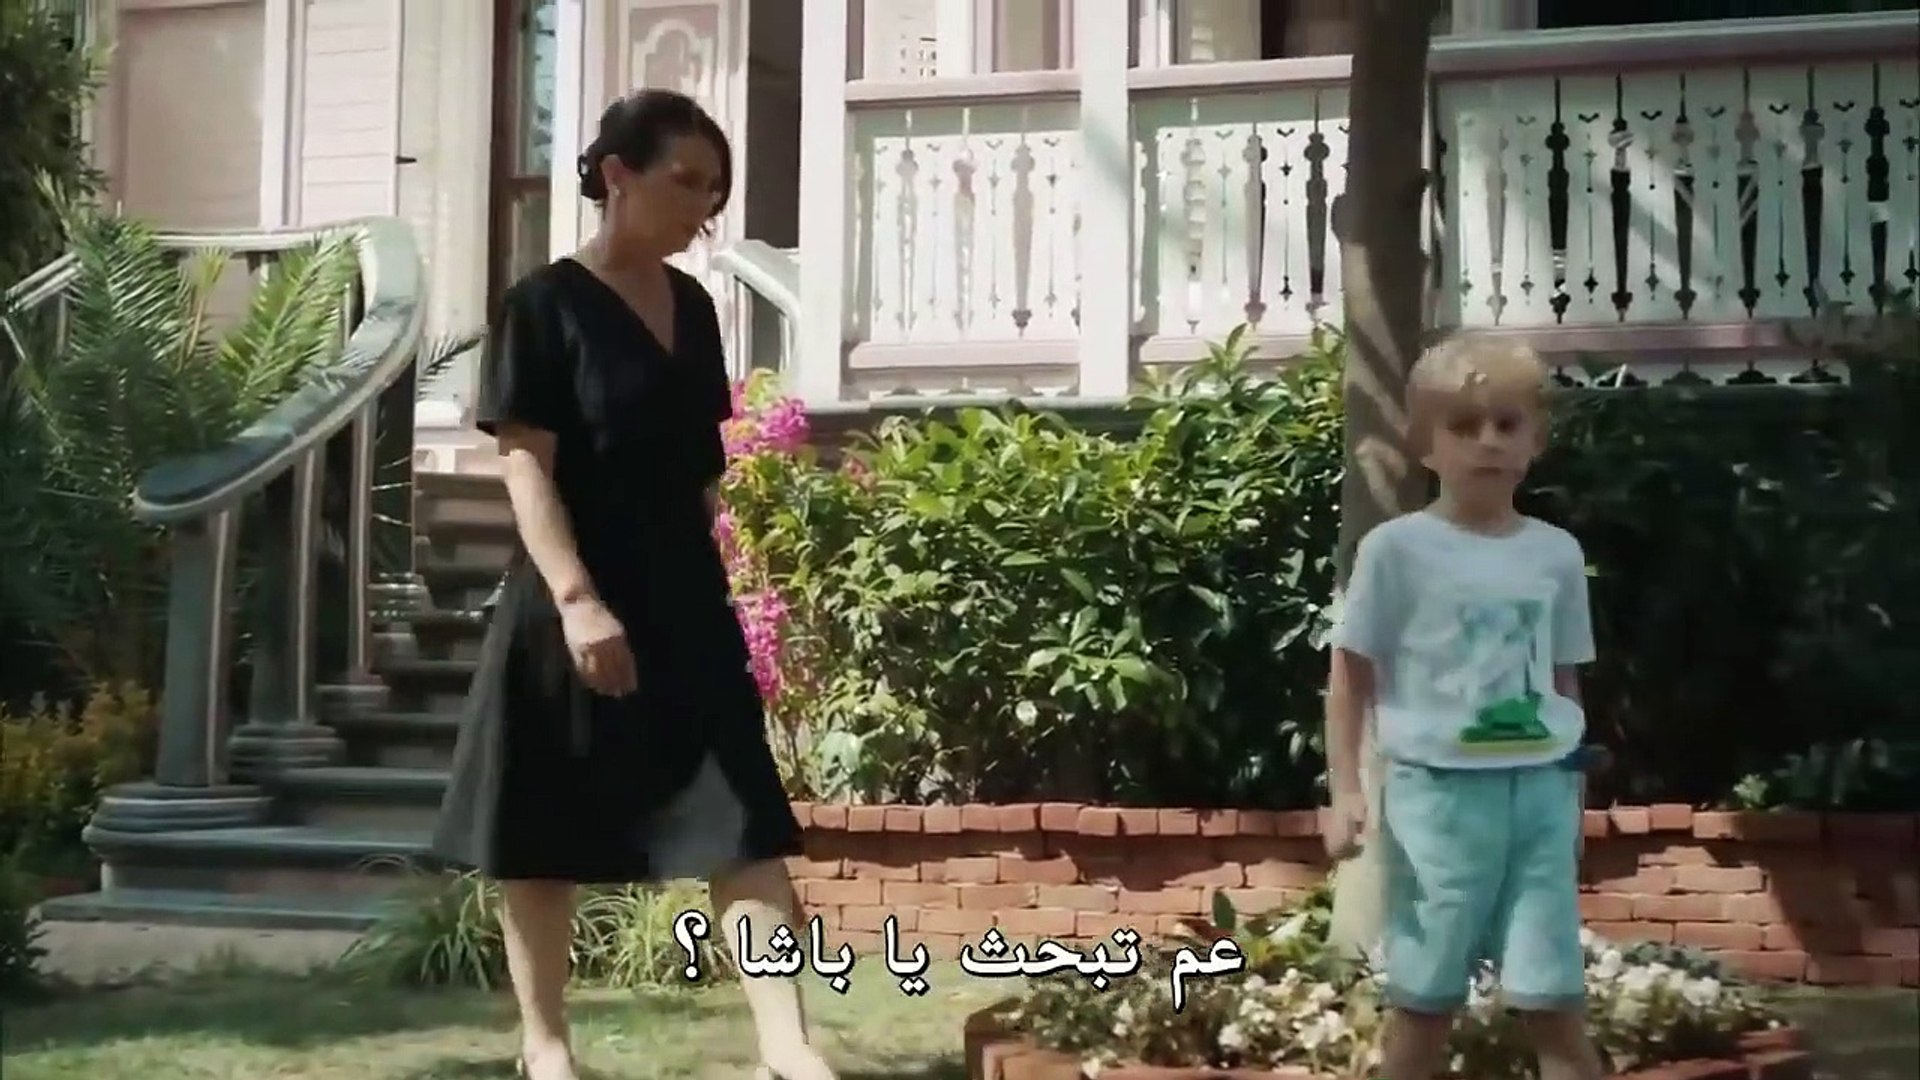 Cocuk مسلسل الطفل الحلقة 1 مترجمة للعربية الجزء الاول 1 3 فيديو Dailymotion